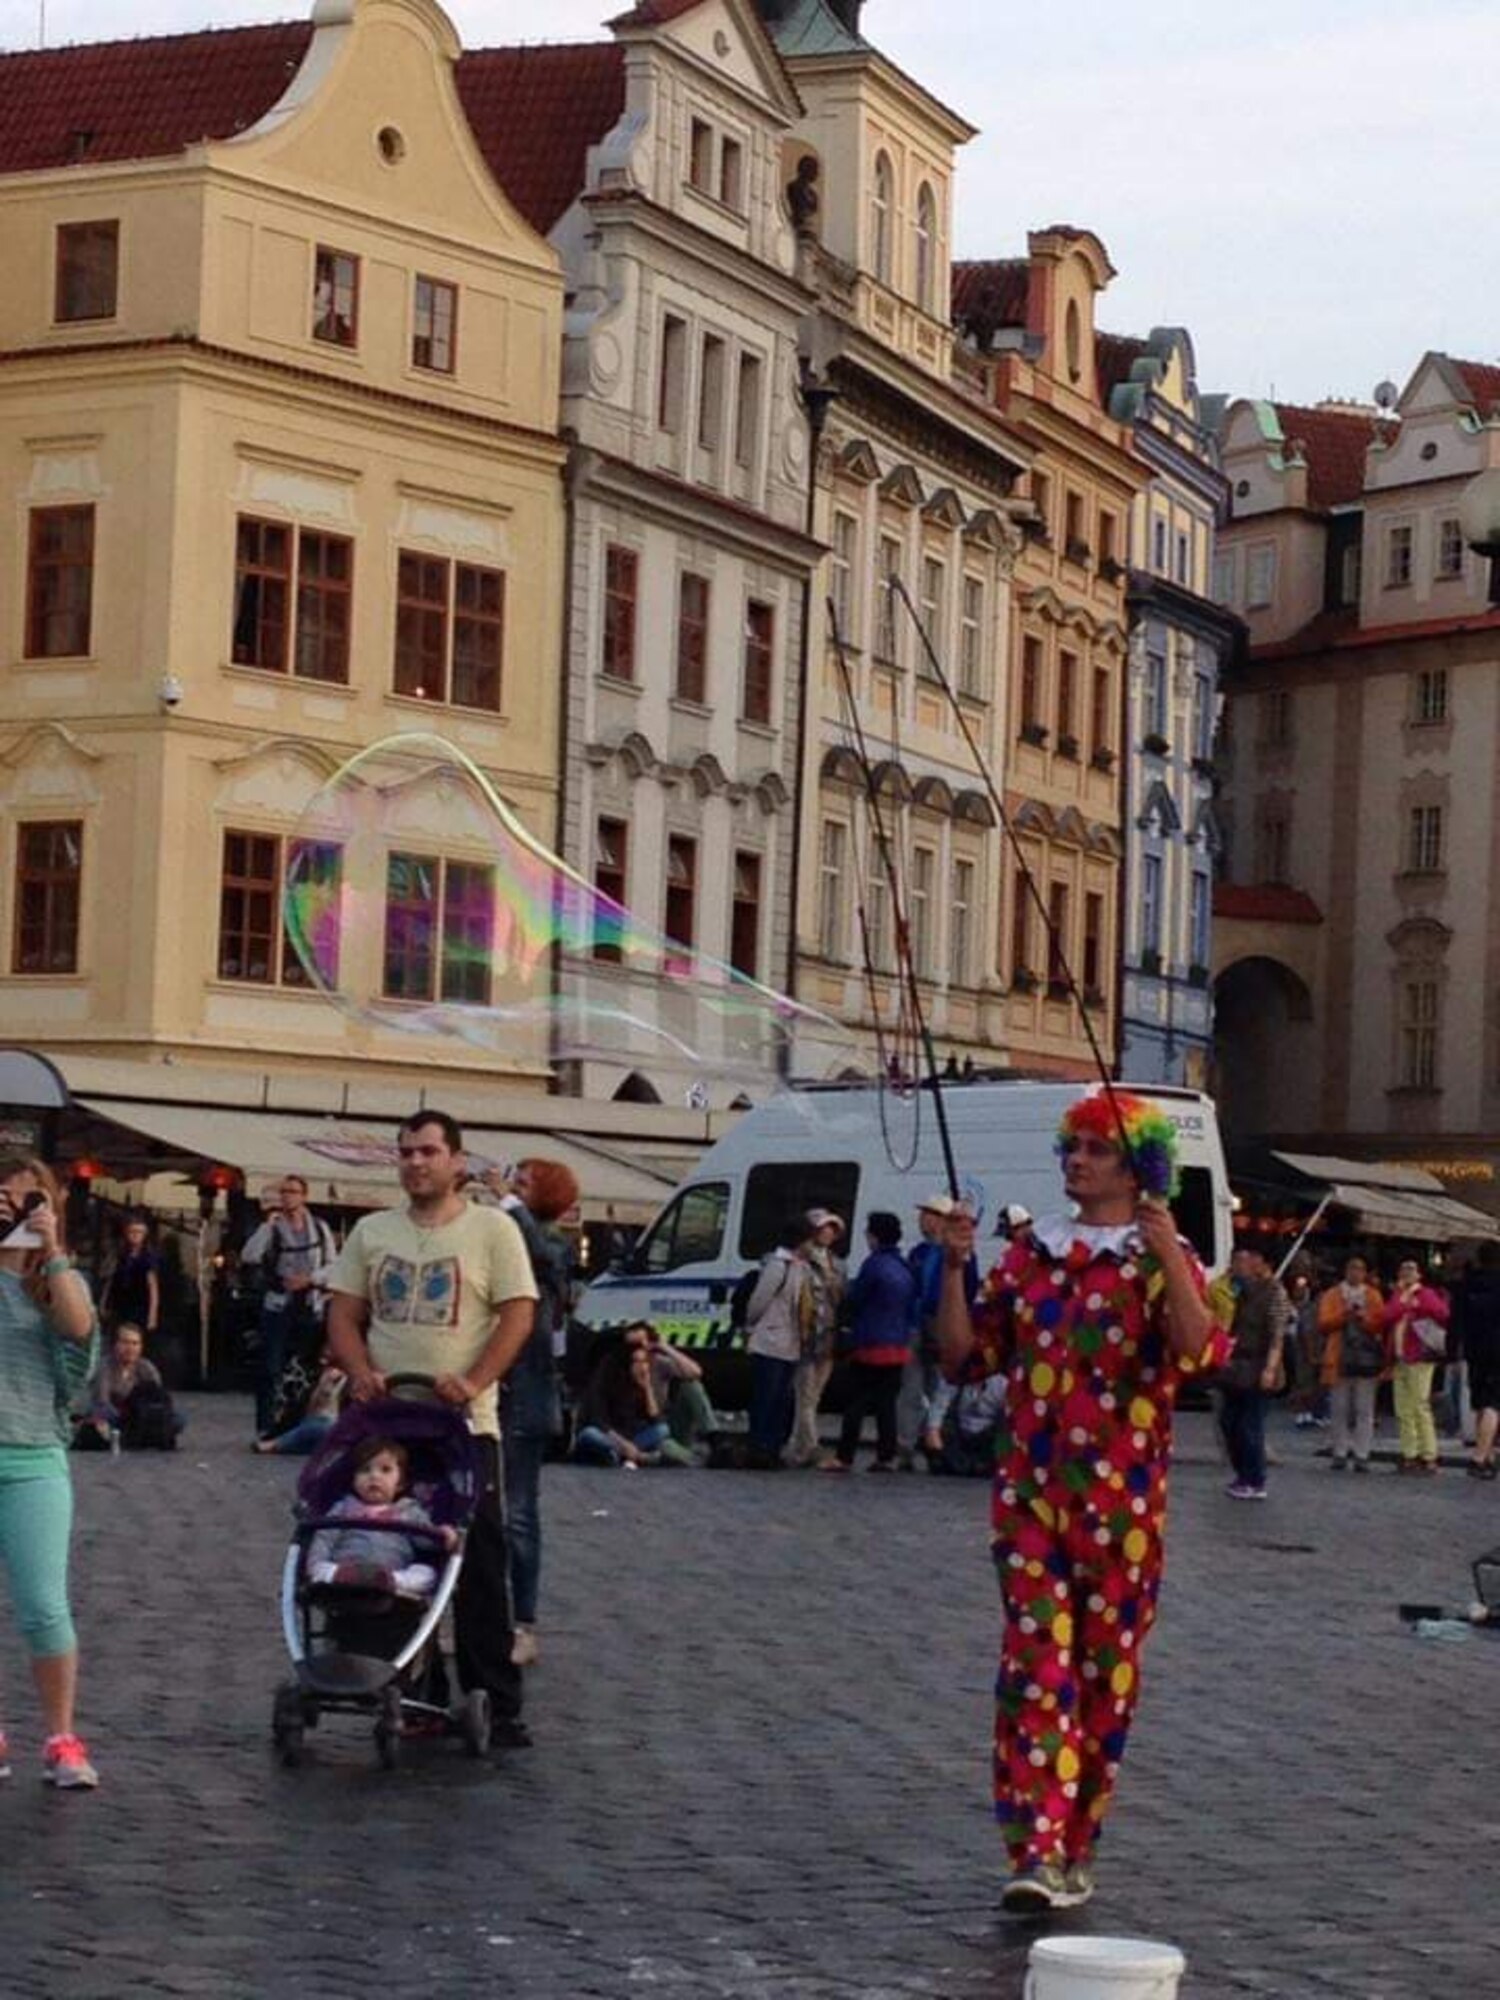 A clown entertains a crowd, Copenhagen, Denmark, 2014.